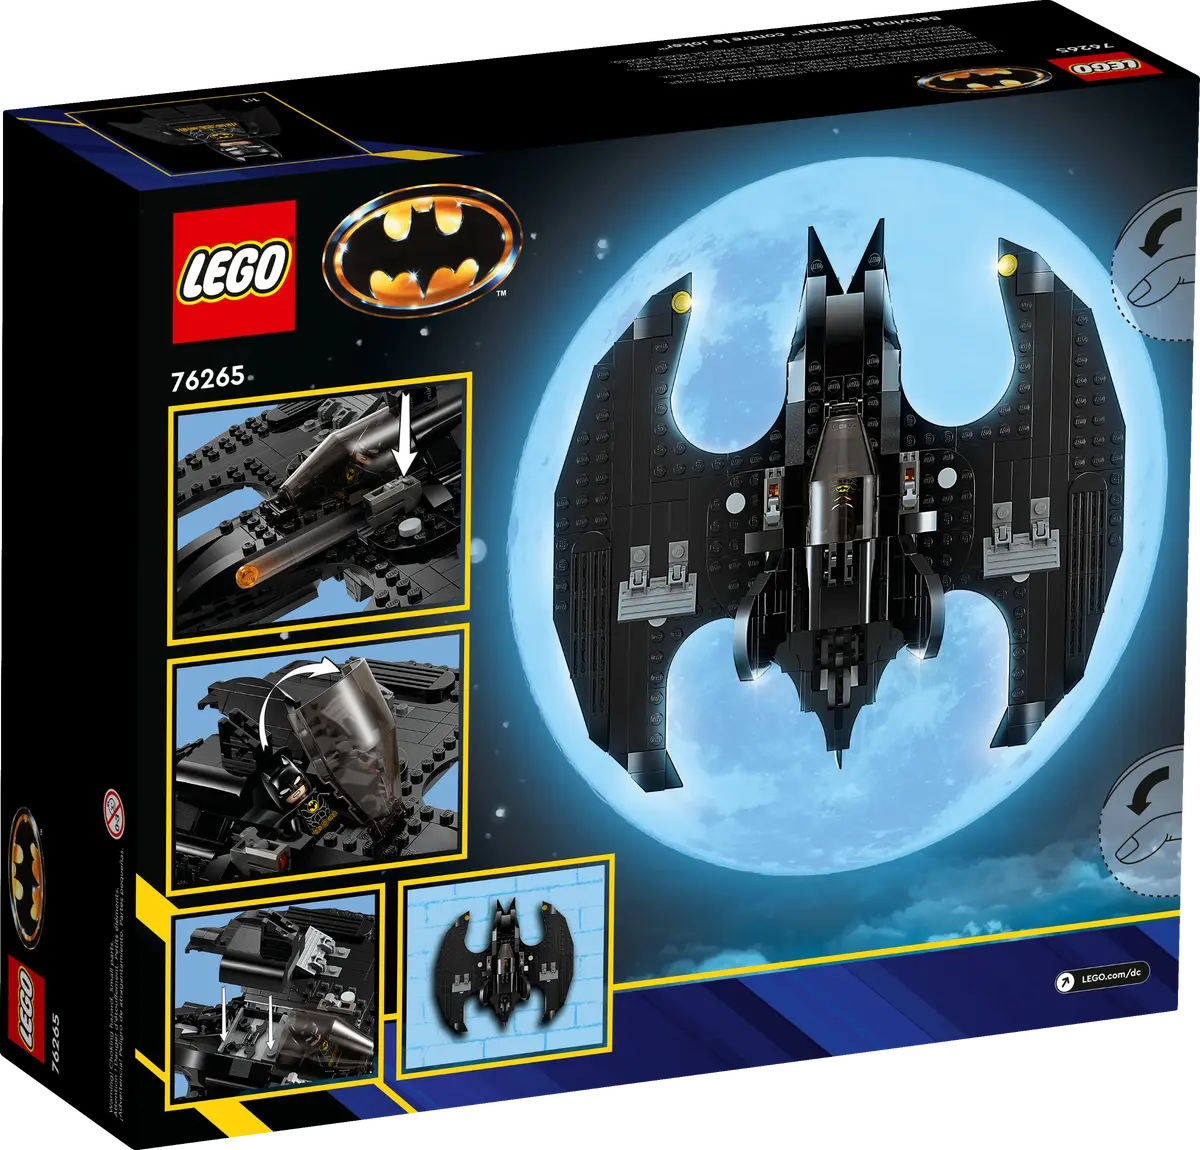 LEGO DC Batwing Batman vs The Joker 76265